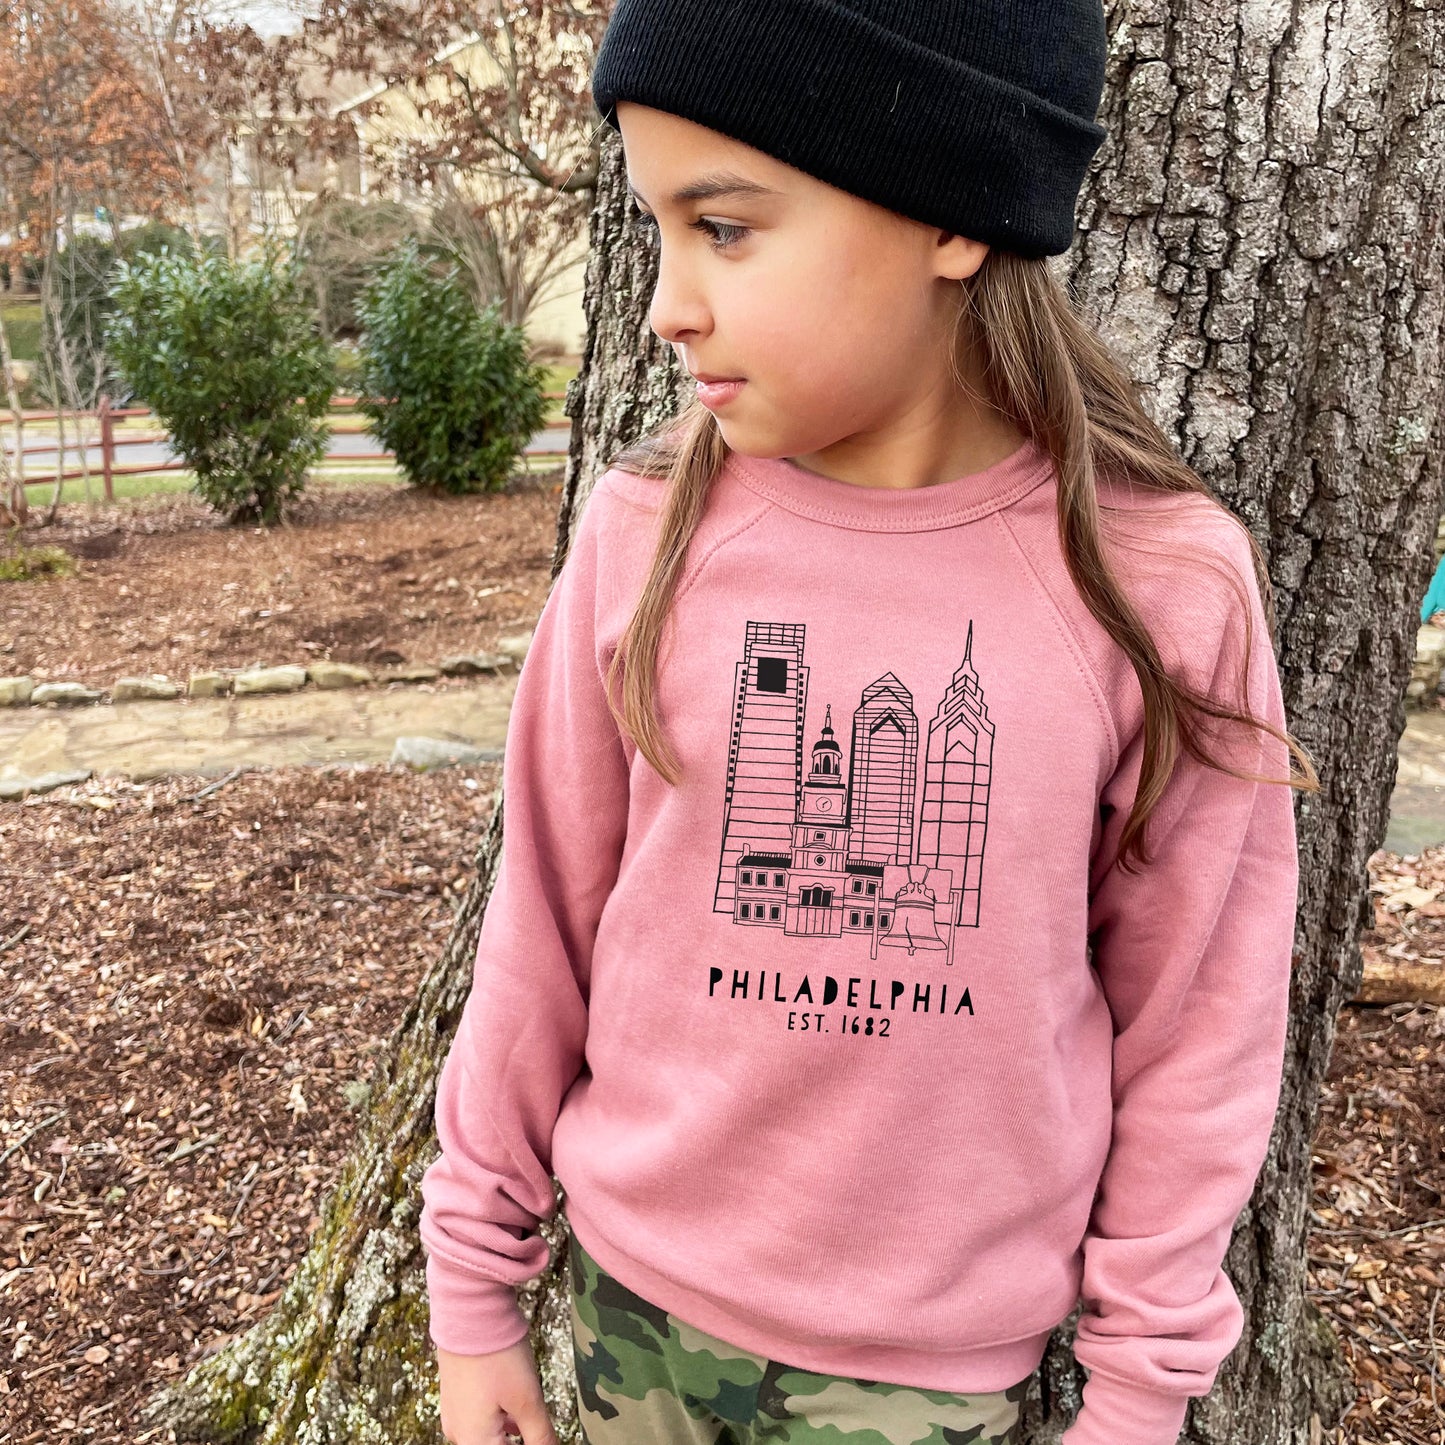 Downtown Philadelphia, PA - Kid's Sweatshirt - Heather Gray or Mauve